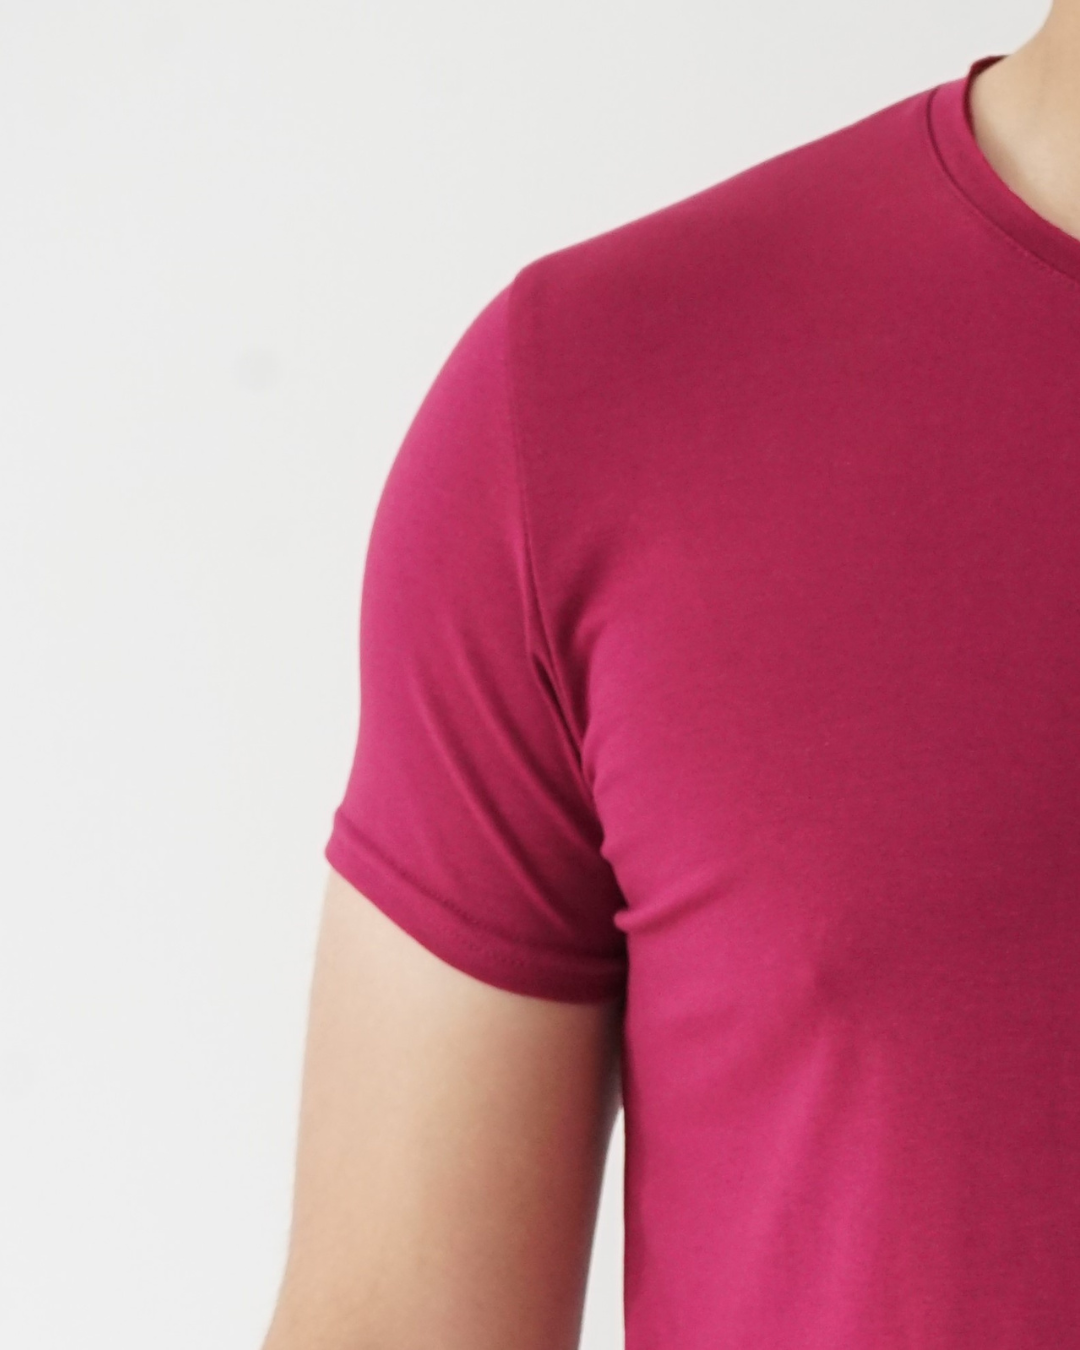 Cherry Wine T-shirt - Short Sleeve Wide Neck Curved Bottom